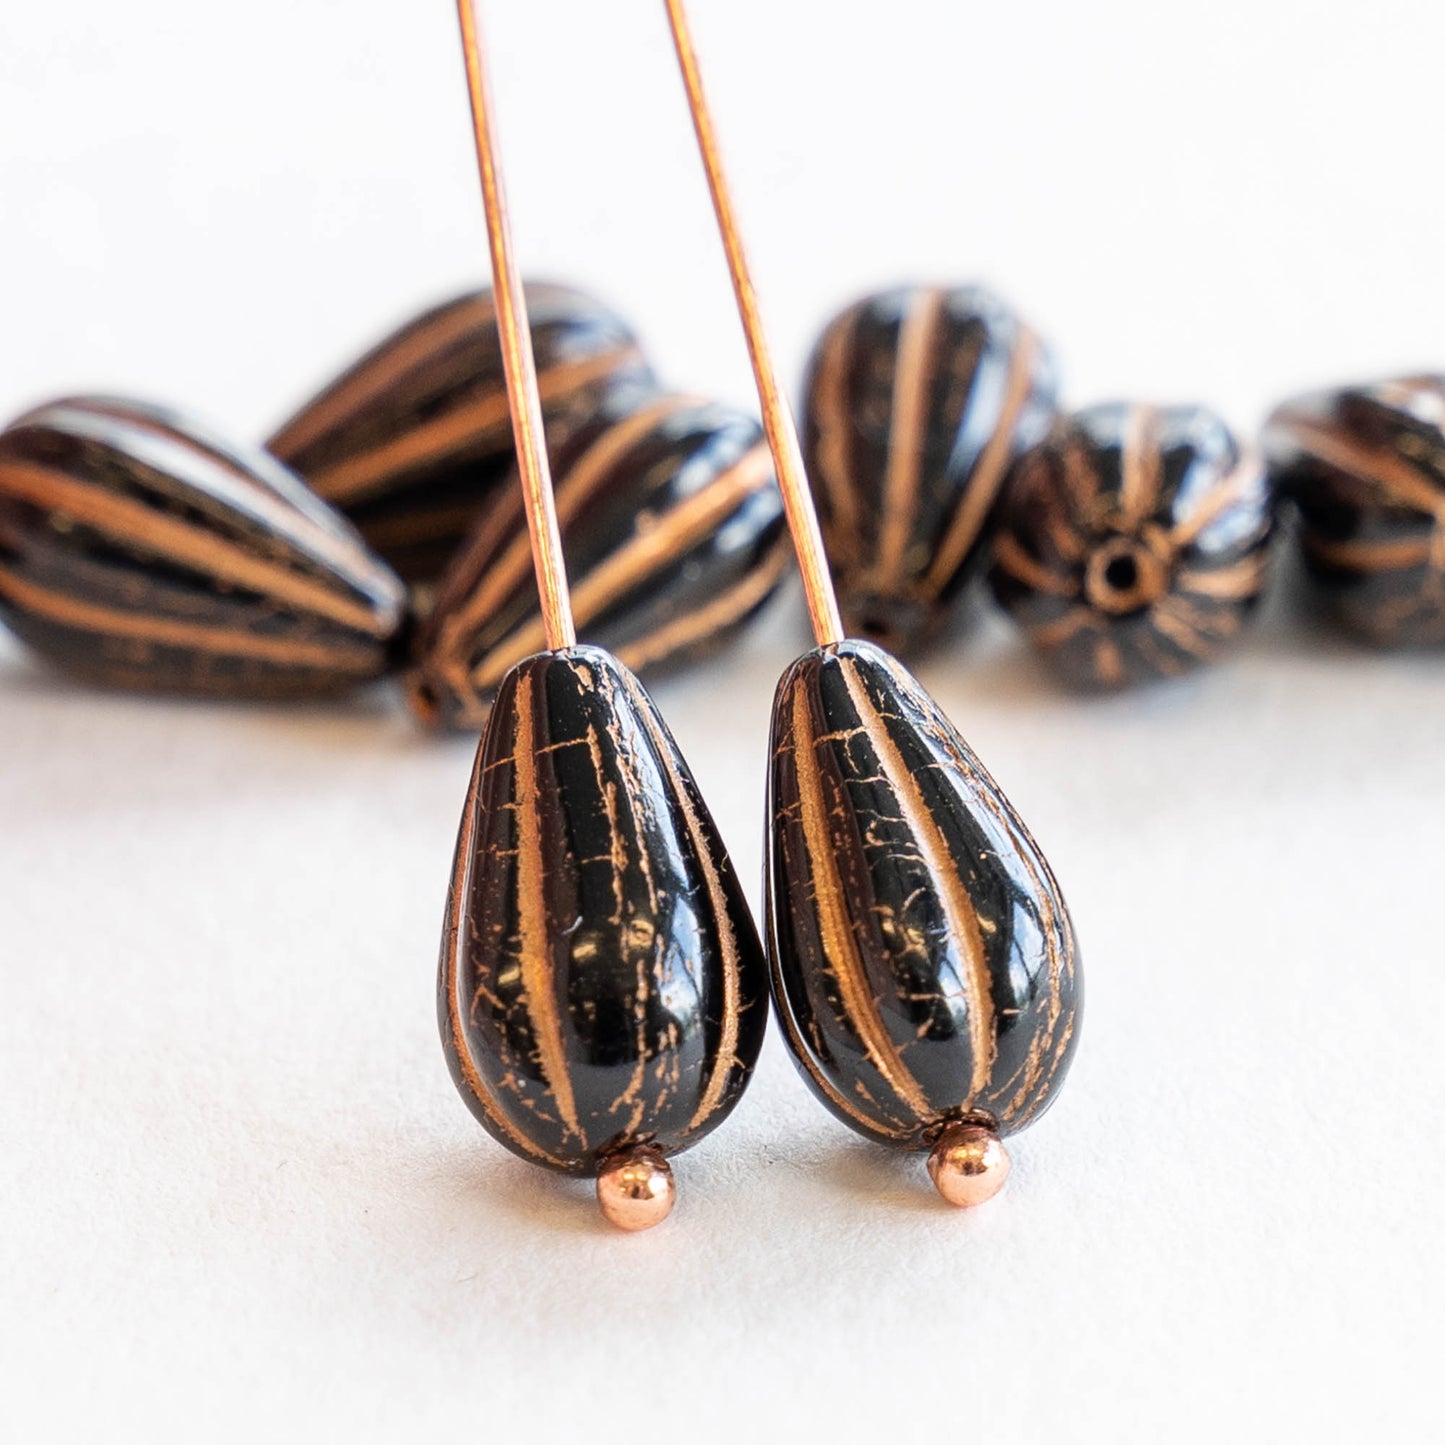 8x13mm Melon Drop - Black with Bronze Wash - 10 Beads